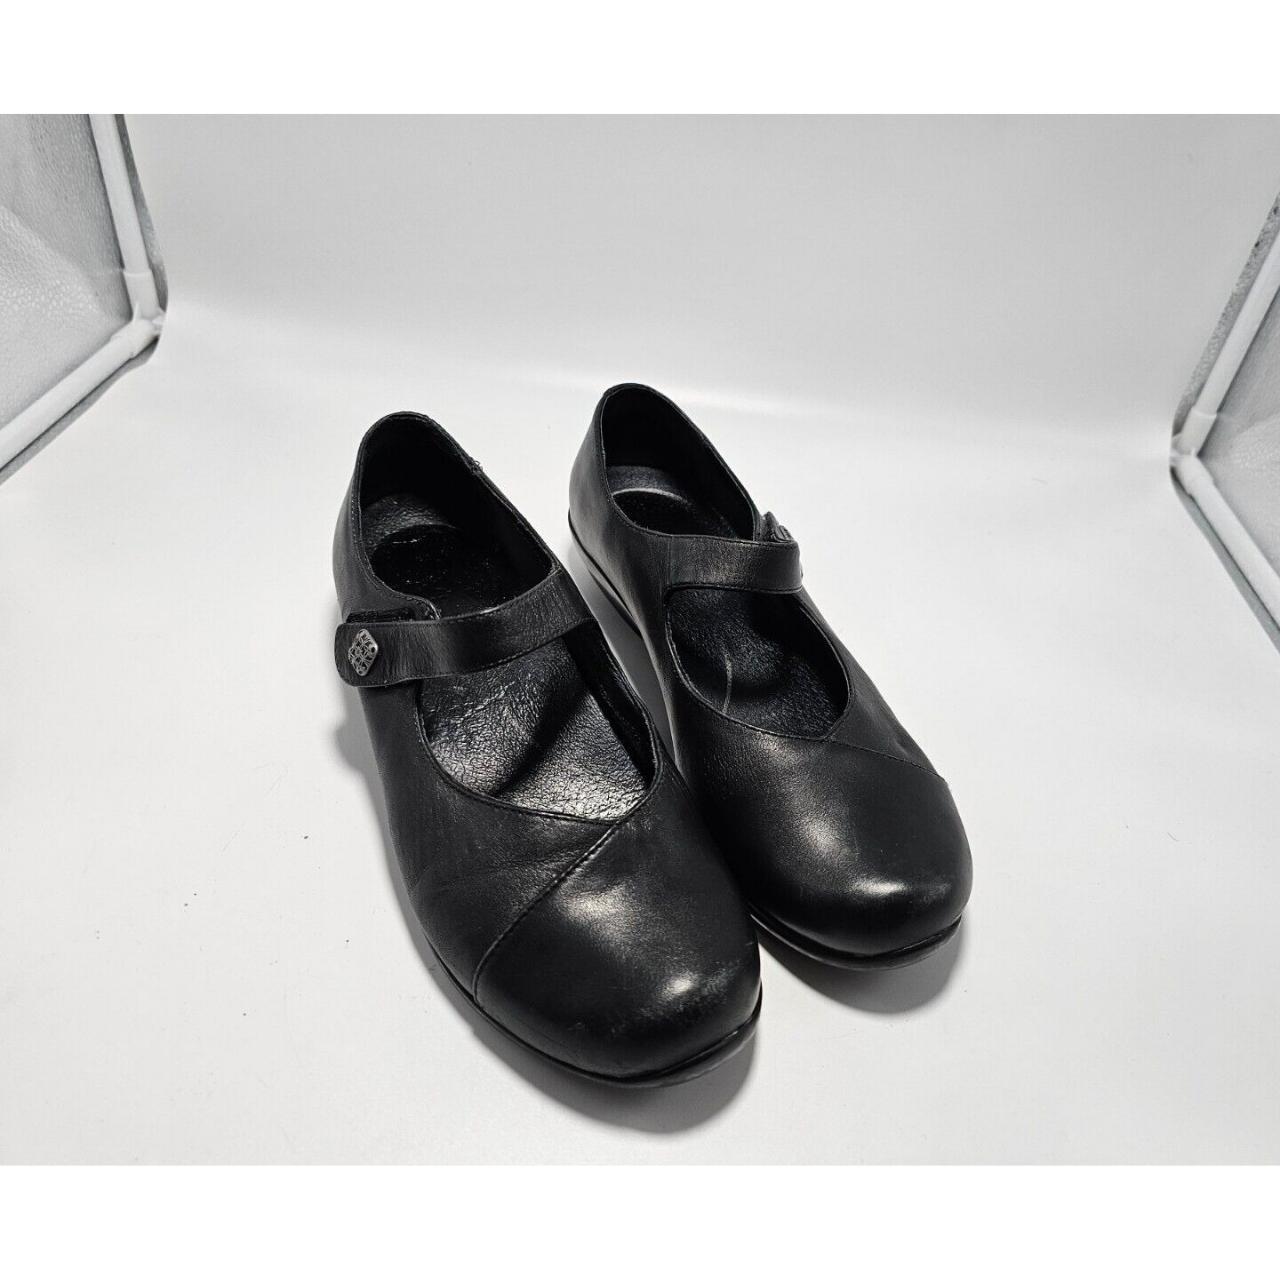 DANSKO Mary Jane Shoes Adult Size 7 Black Leather... - Depop